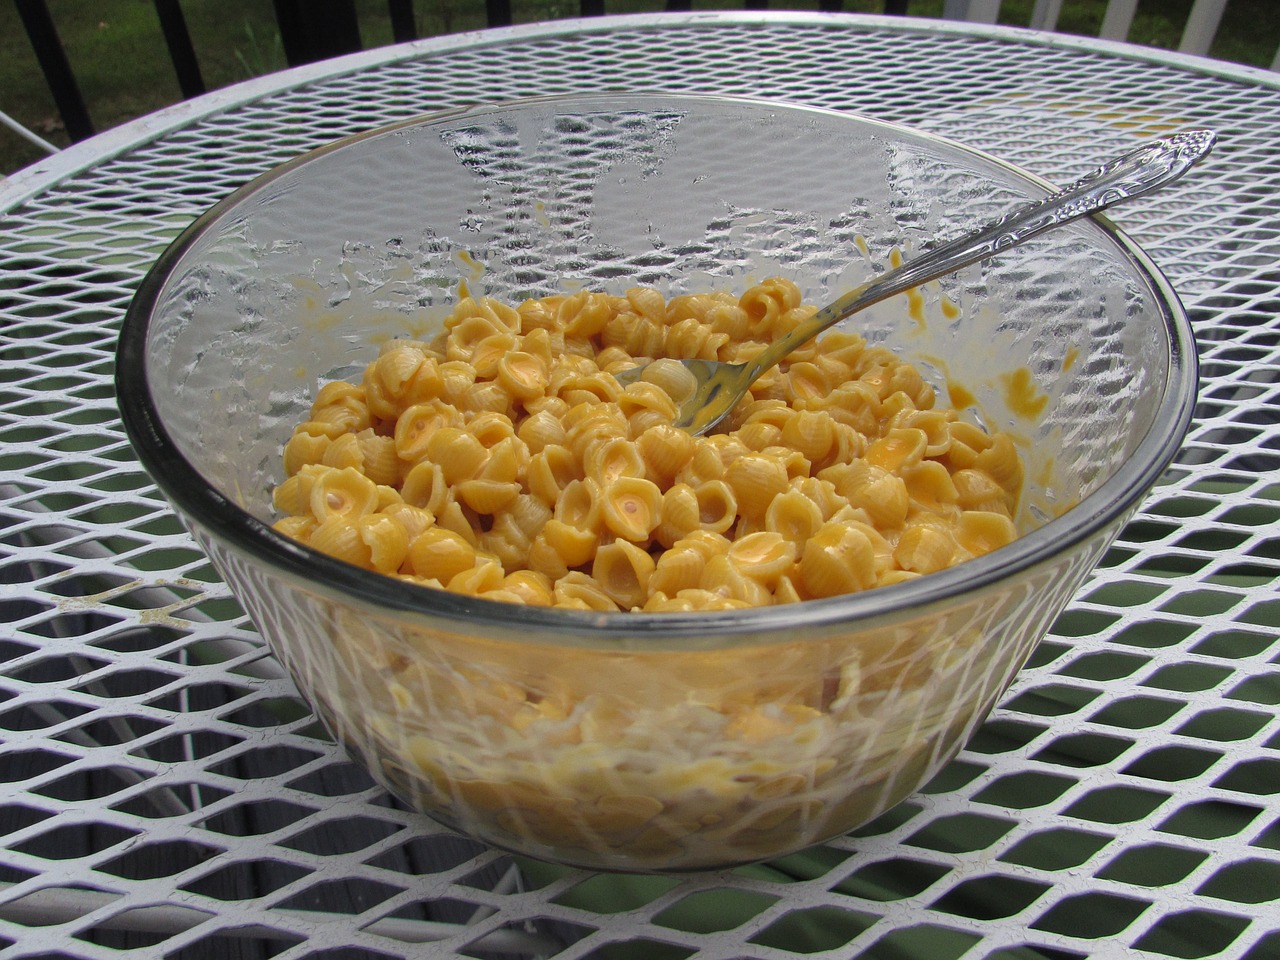 Super cheesy macaroni and cheese